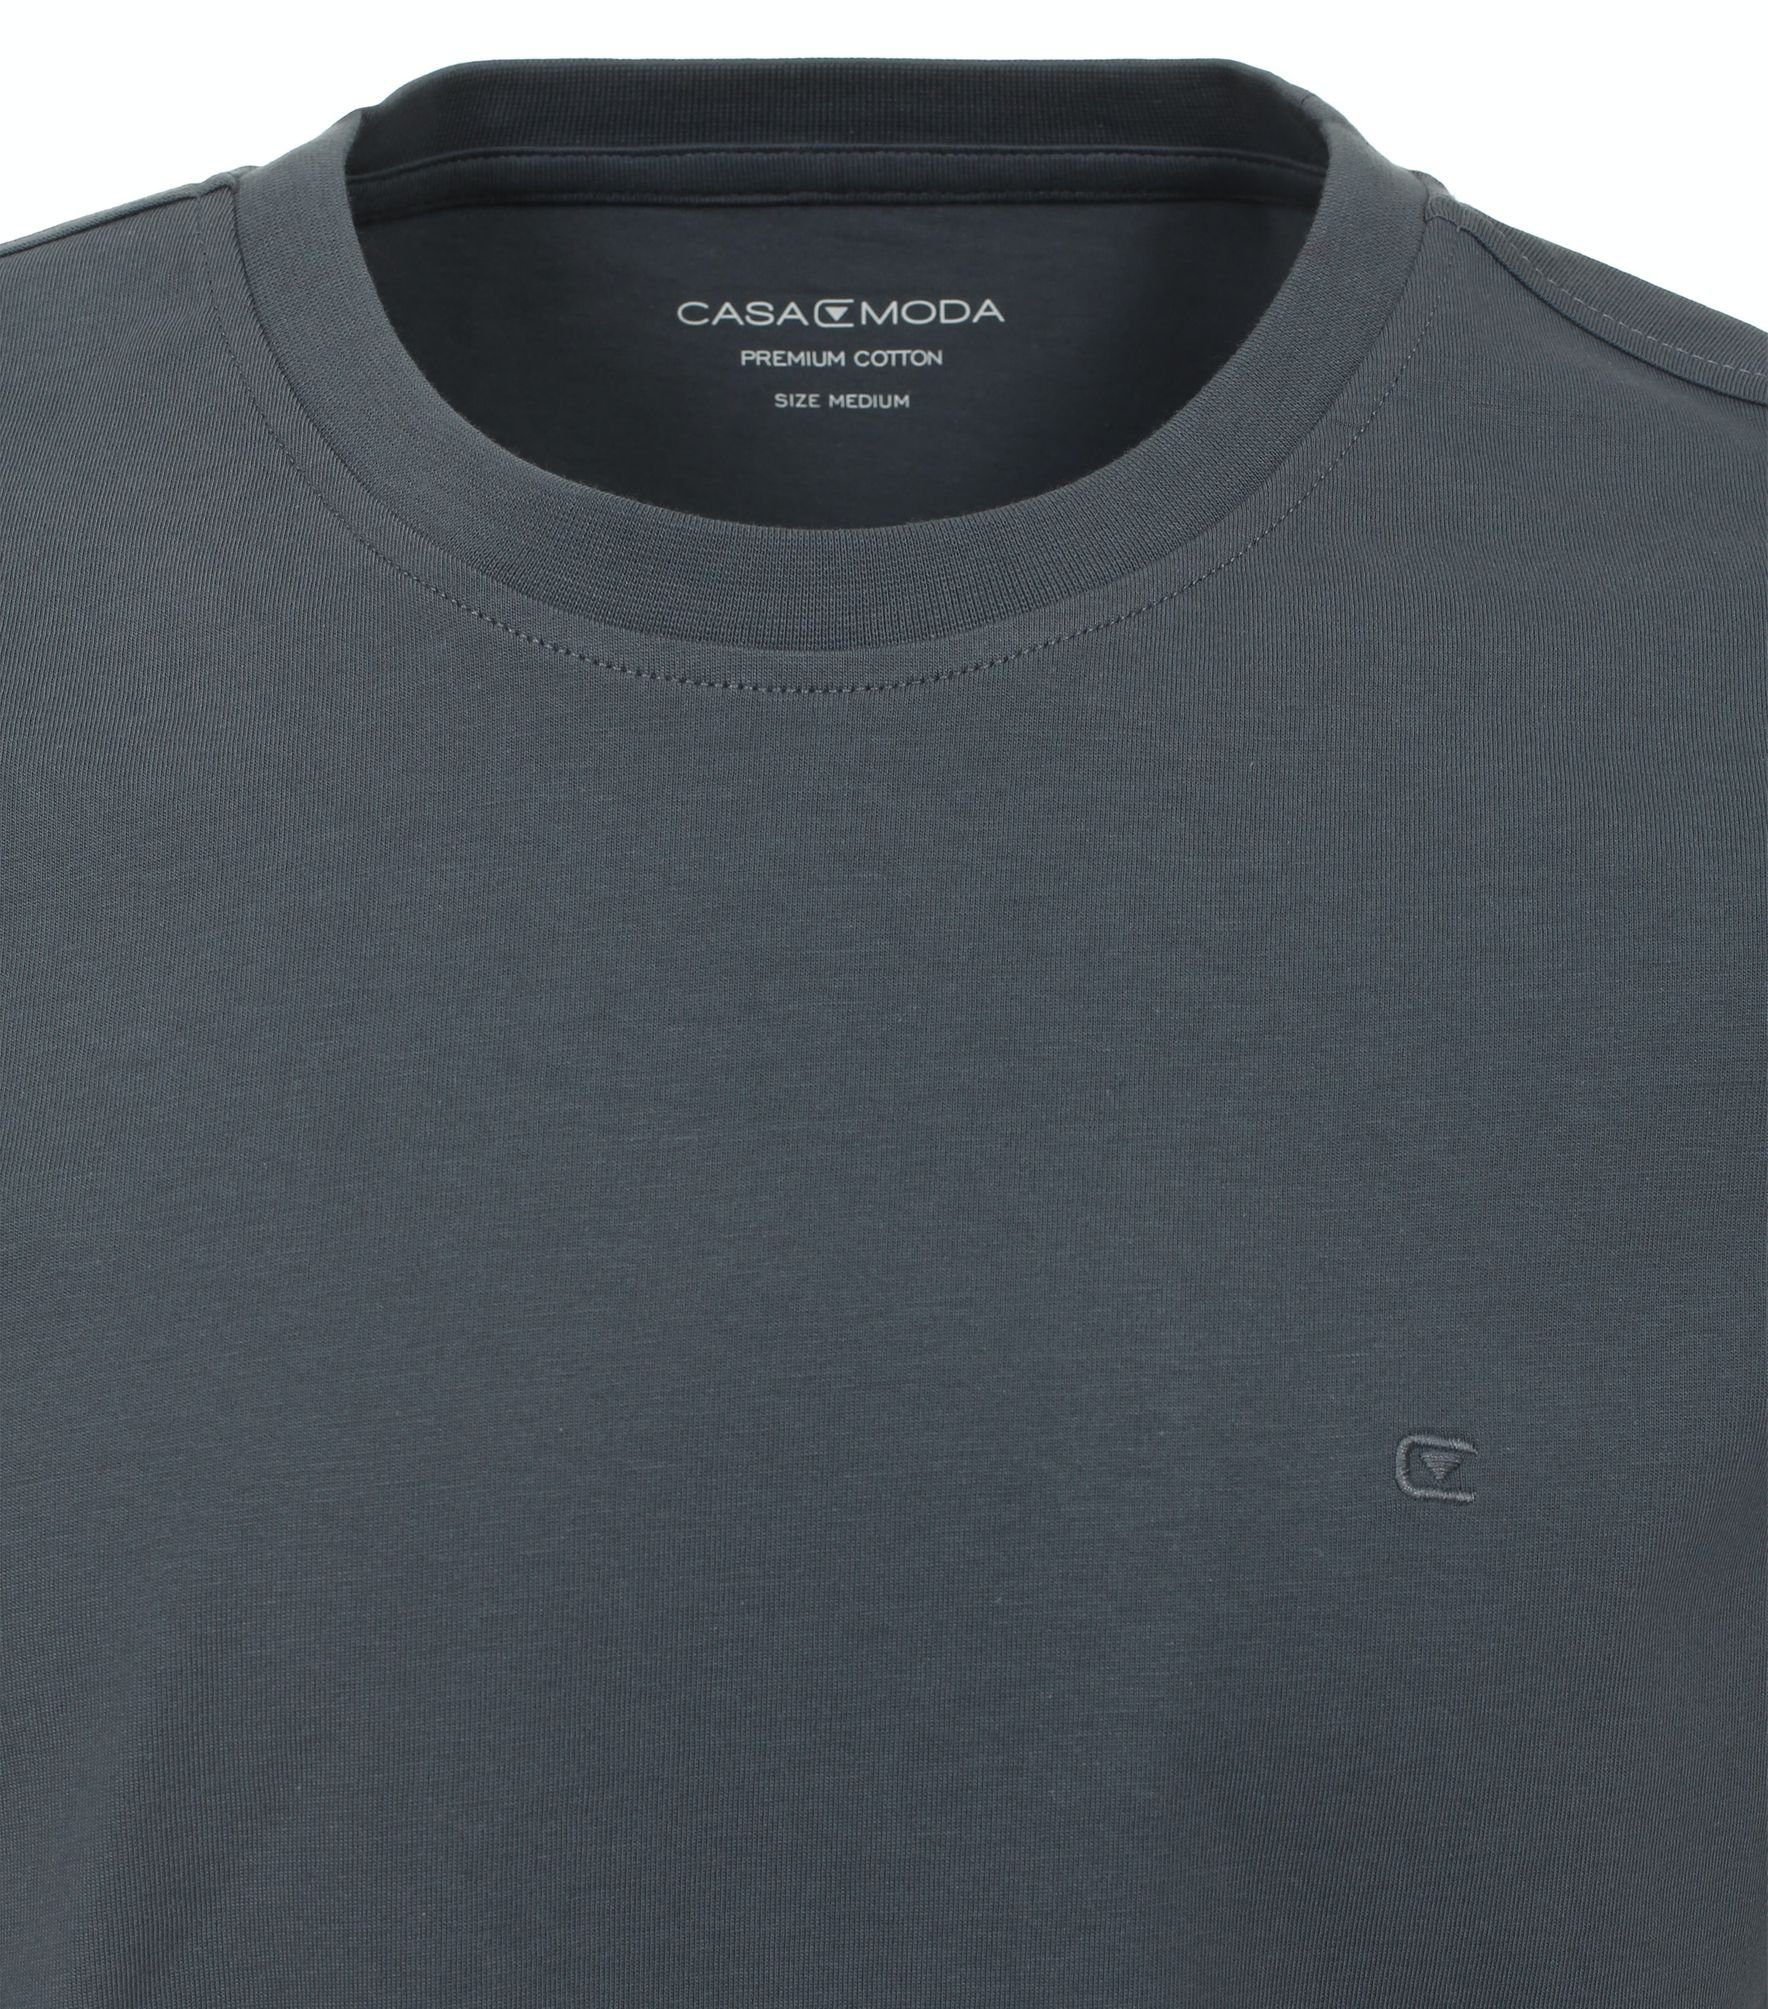 CASAMODA T-Shirt unifarben 004200 beige T-Shirt (625)